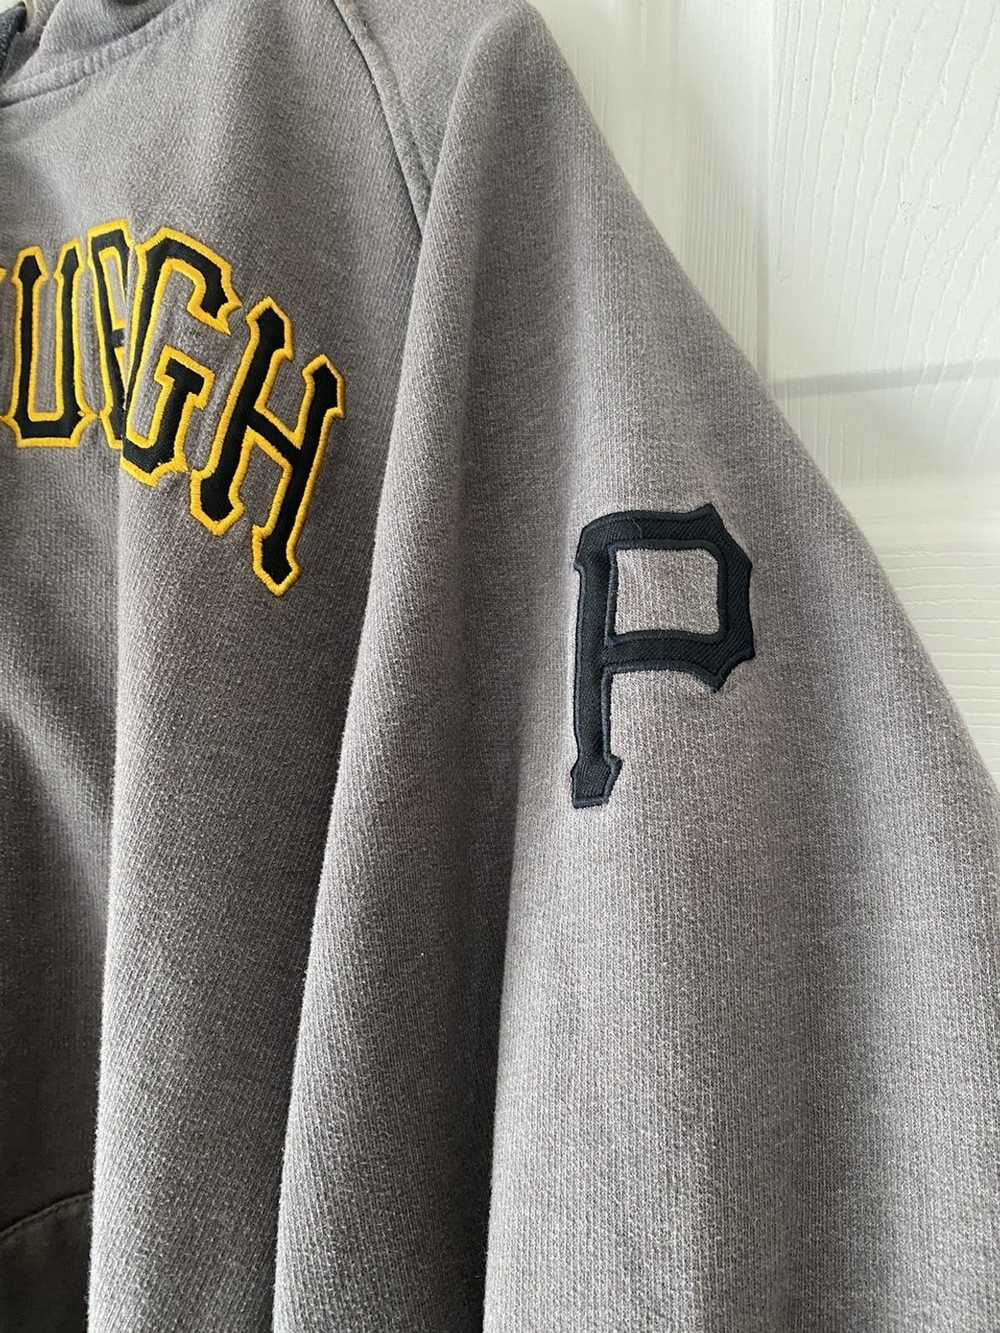 MLB Pittsburg Pirates Jacket/Sweatshirt - image 3